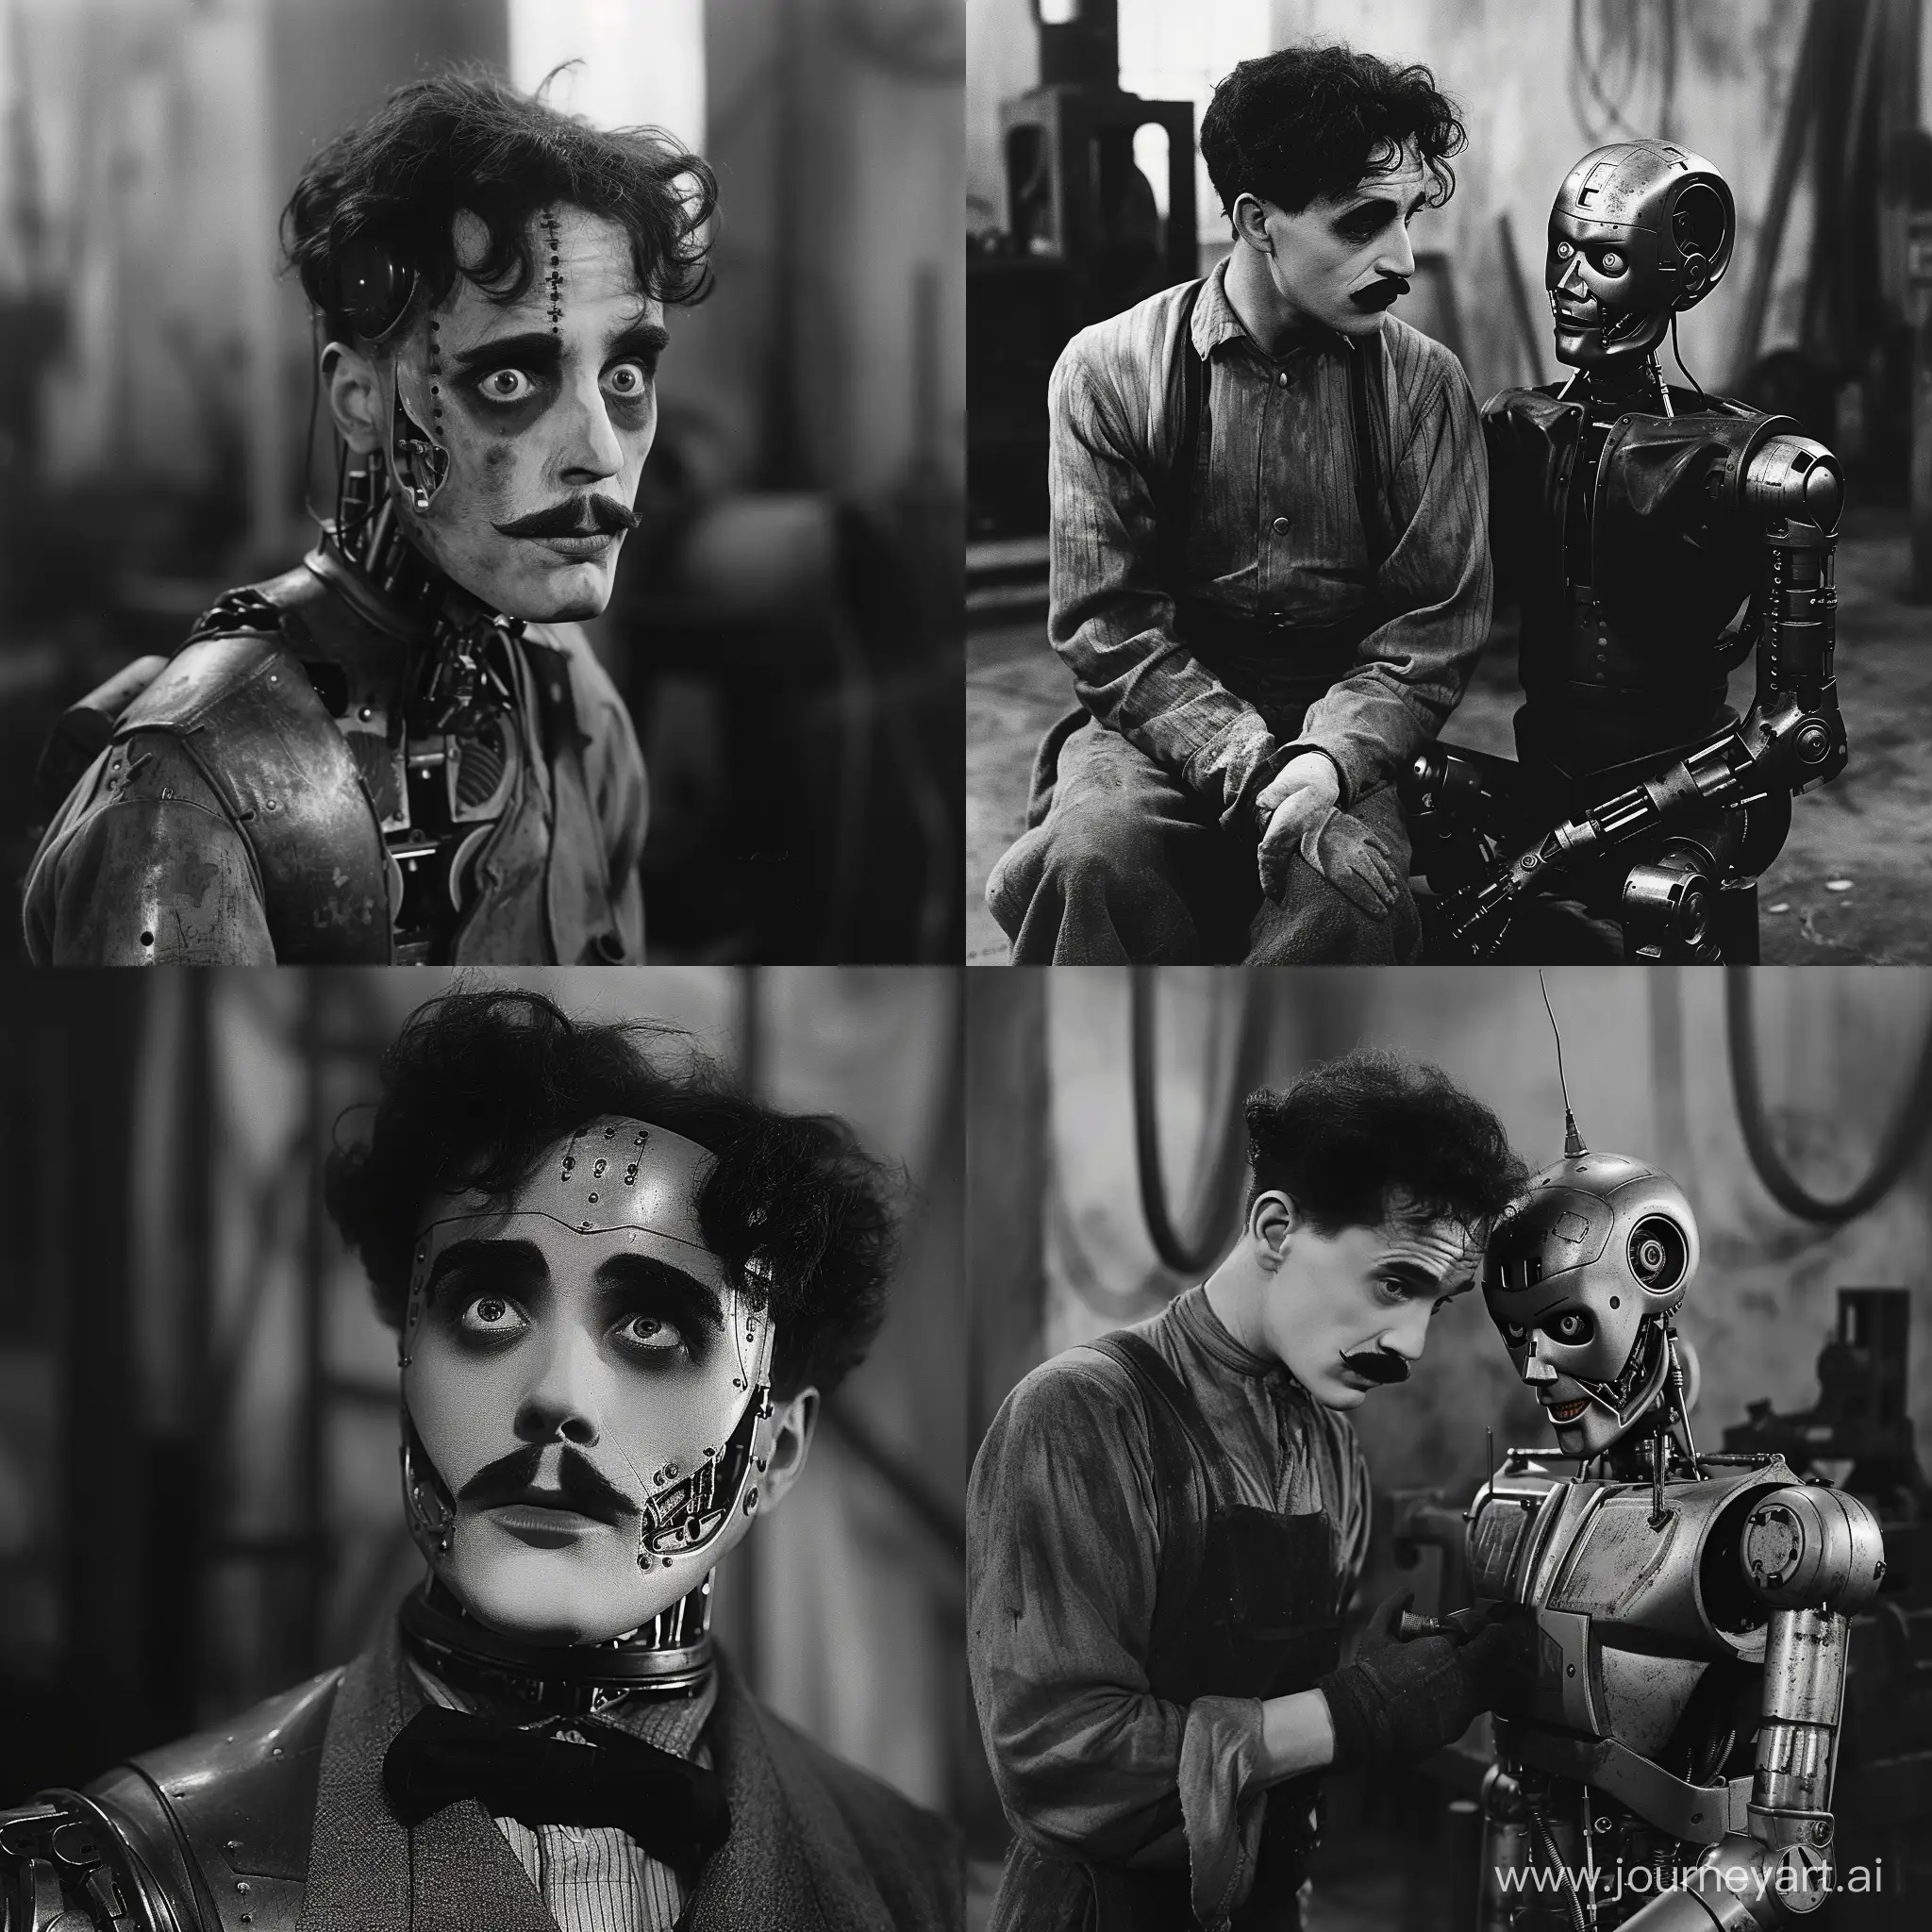 Charlie-Chaplin-Terminator-Fusion-Art-Retro-Comedy-meets-SciFi-Action